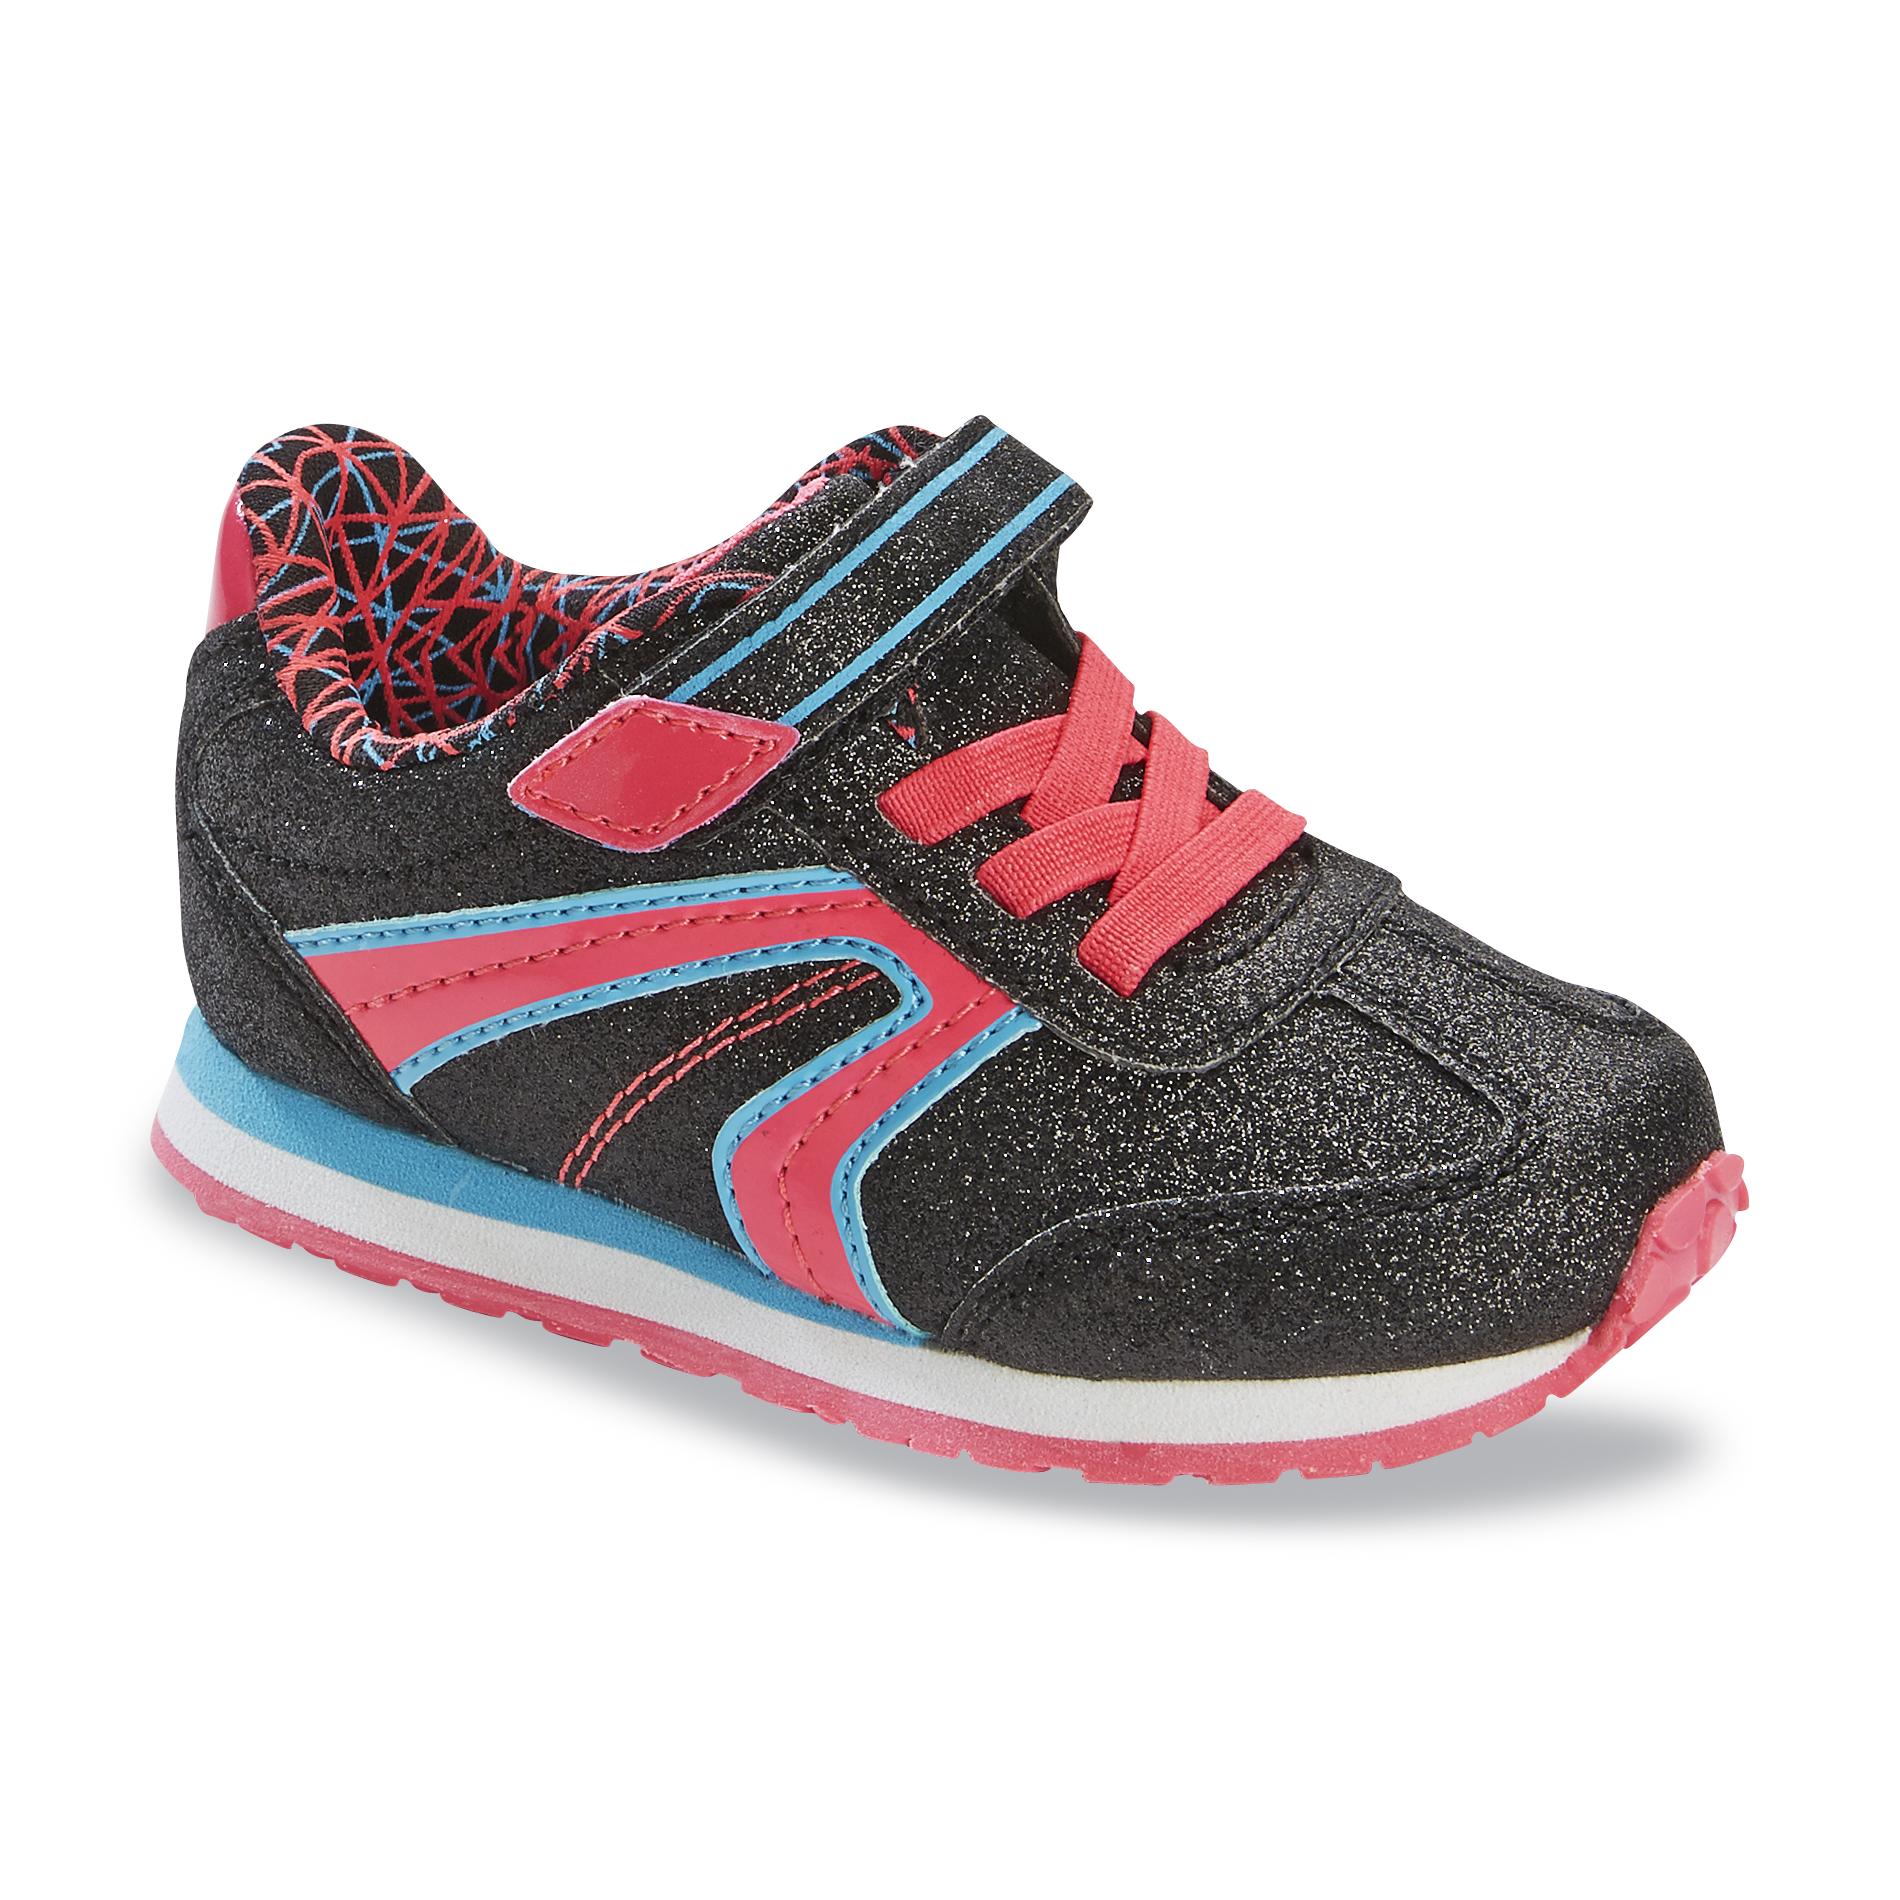 Toddler Girl's Lil Racer Black/Pink/Blue Sneaker